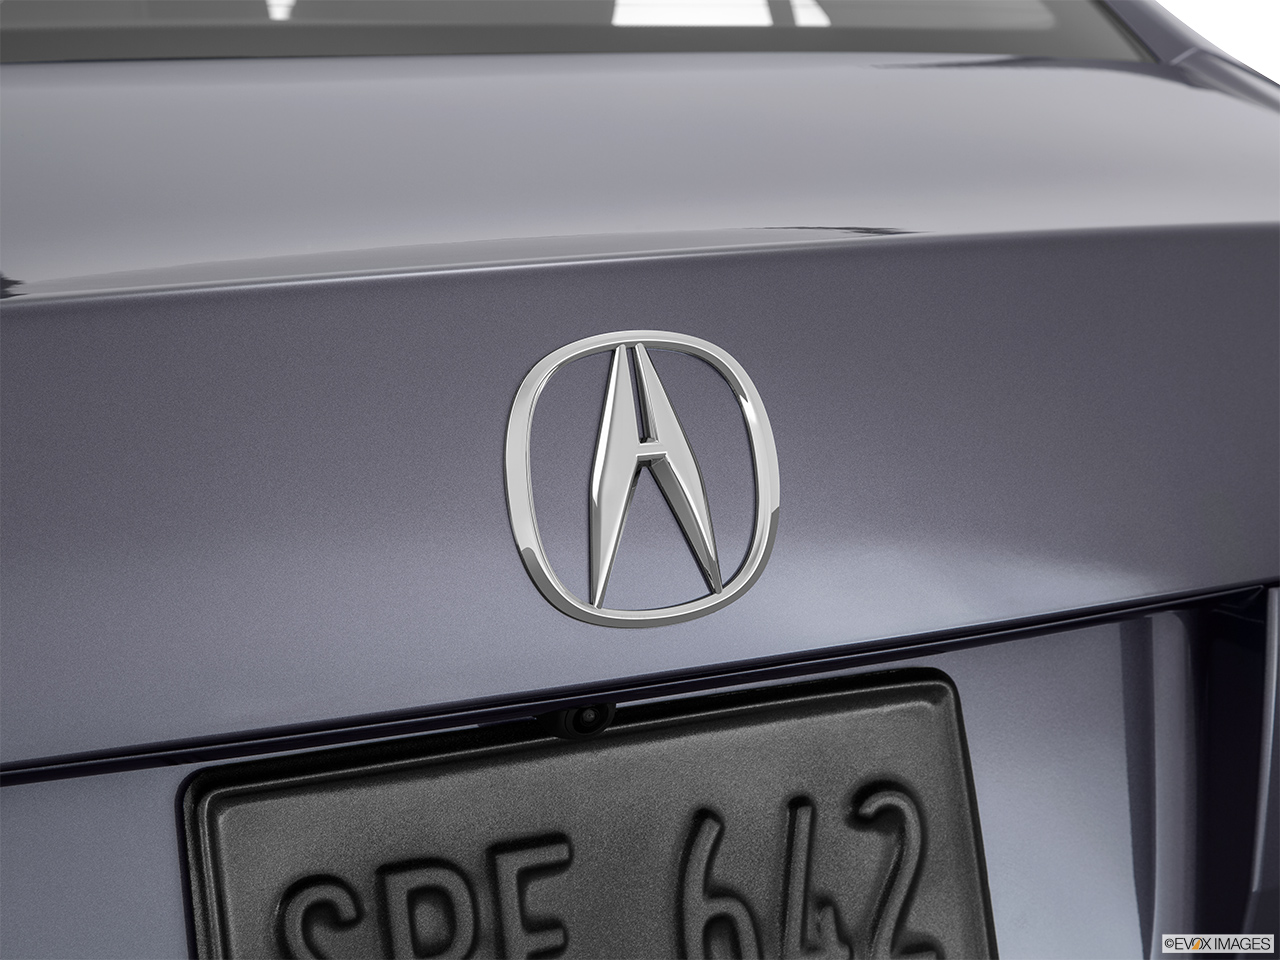 2015 Acura ILX 5-Speed Automatic Rear manufacture badge/emblem 